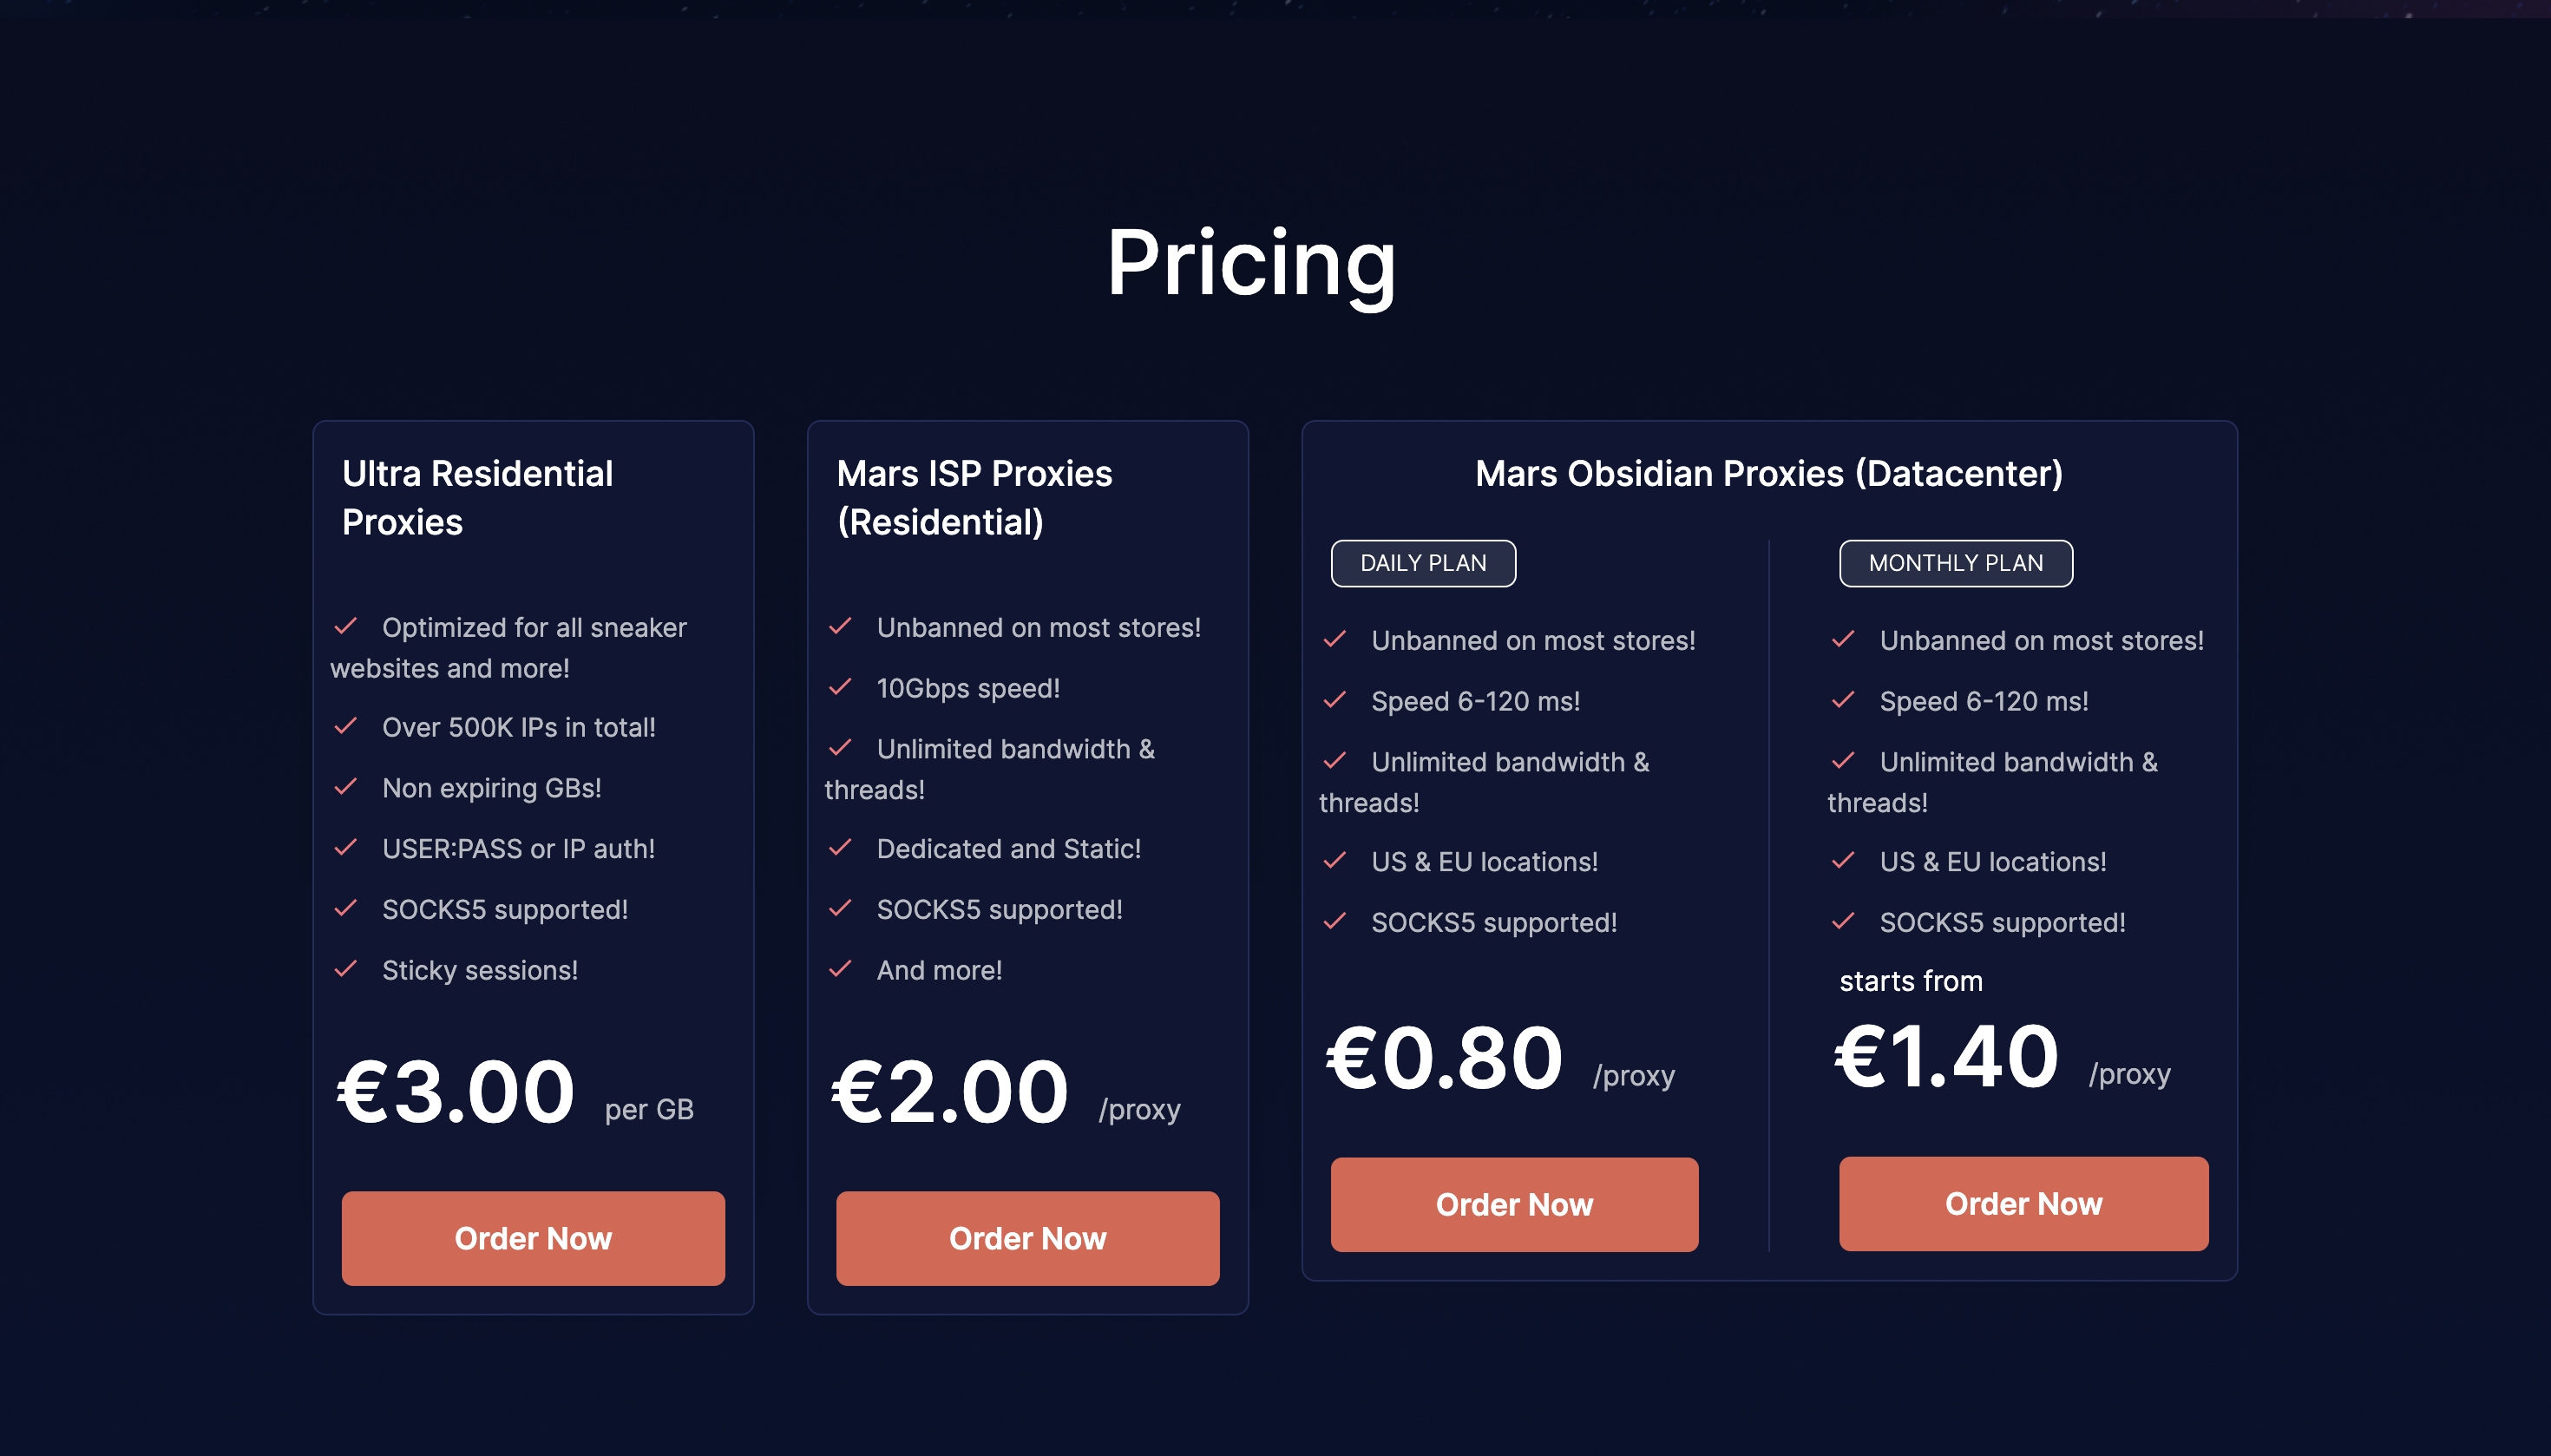 Mars Proxies Pricing